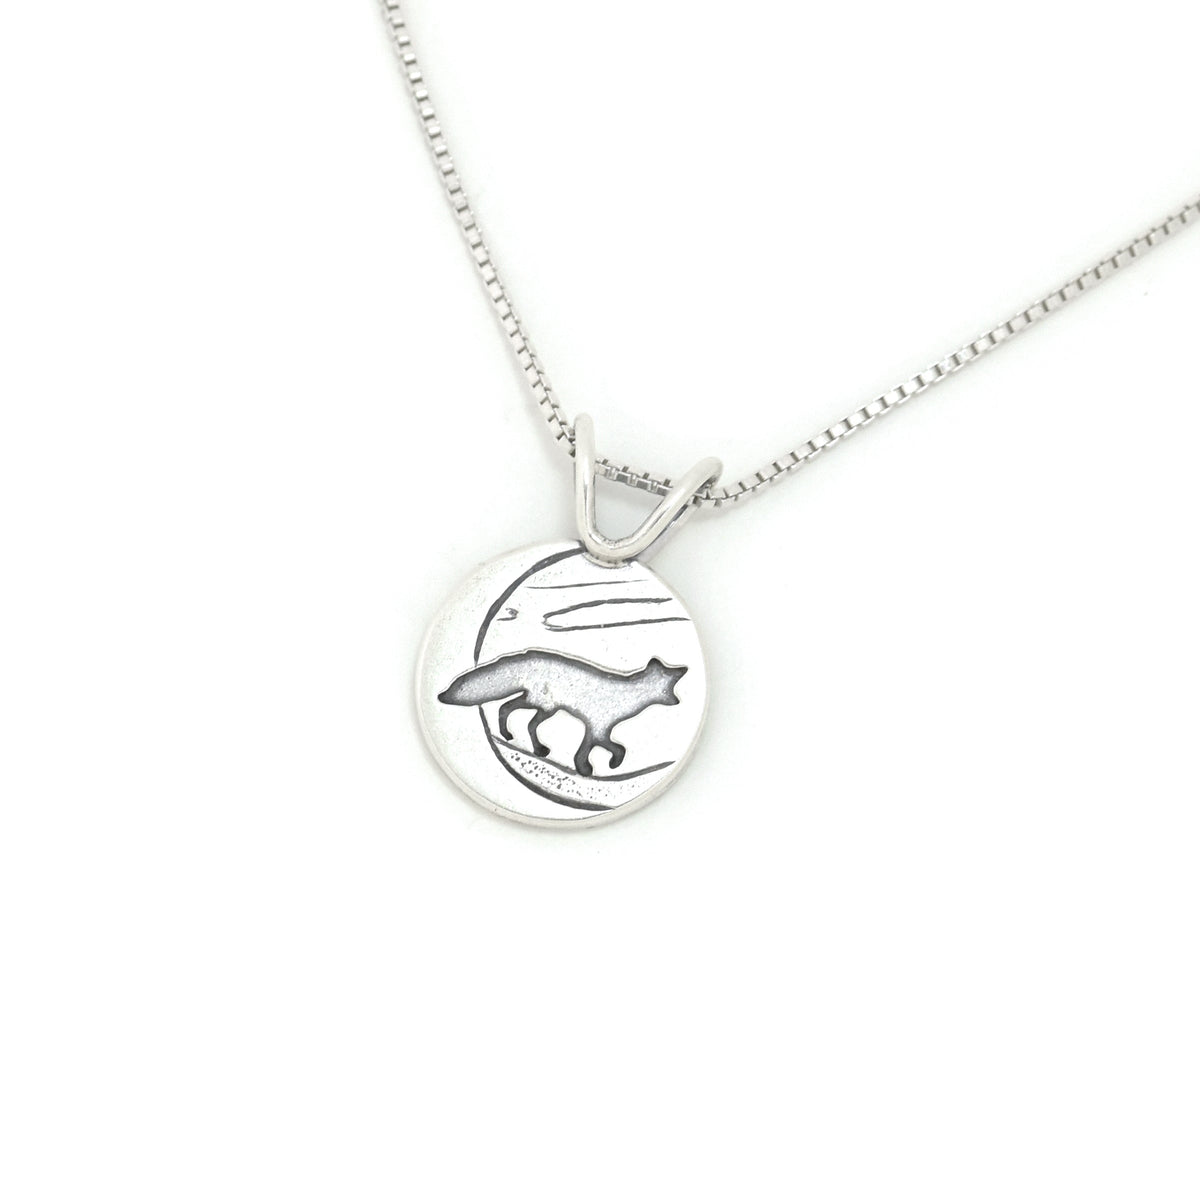 Small Silver Fox Pendant - Silver Pendant   6991 - handmade by Beth Millner Jewelry